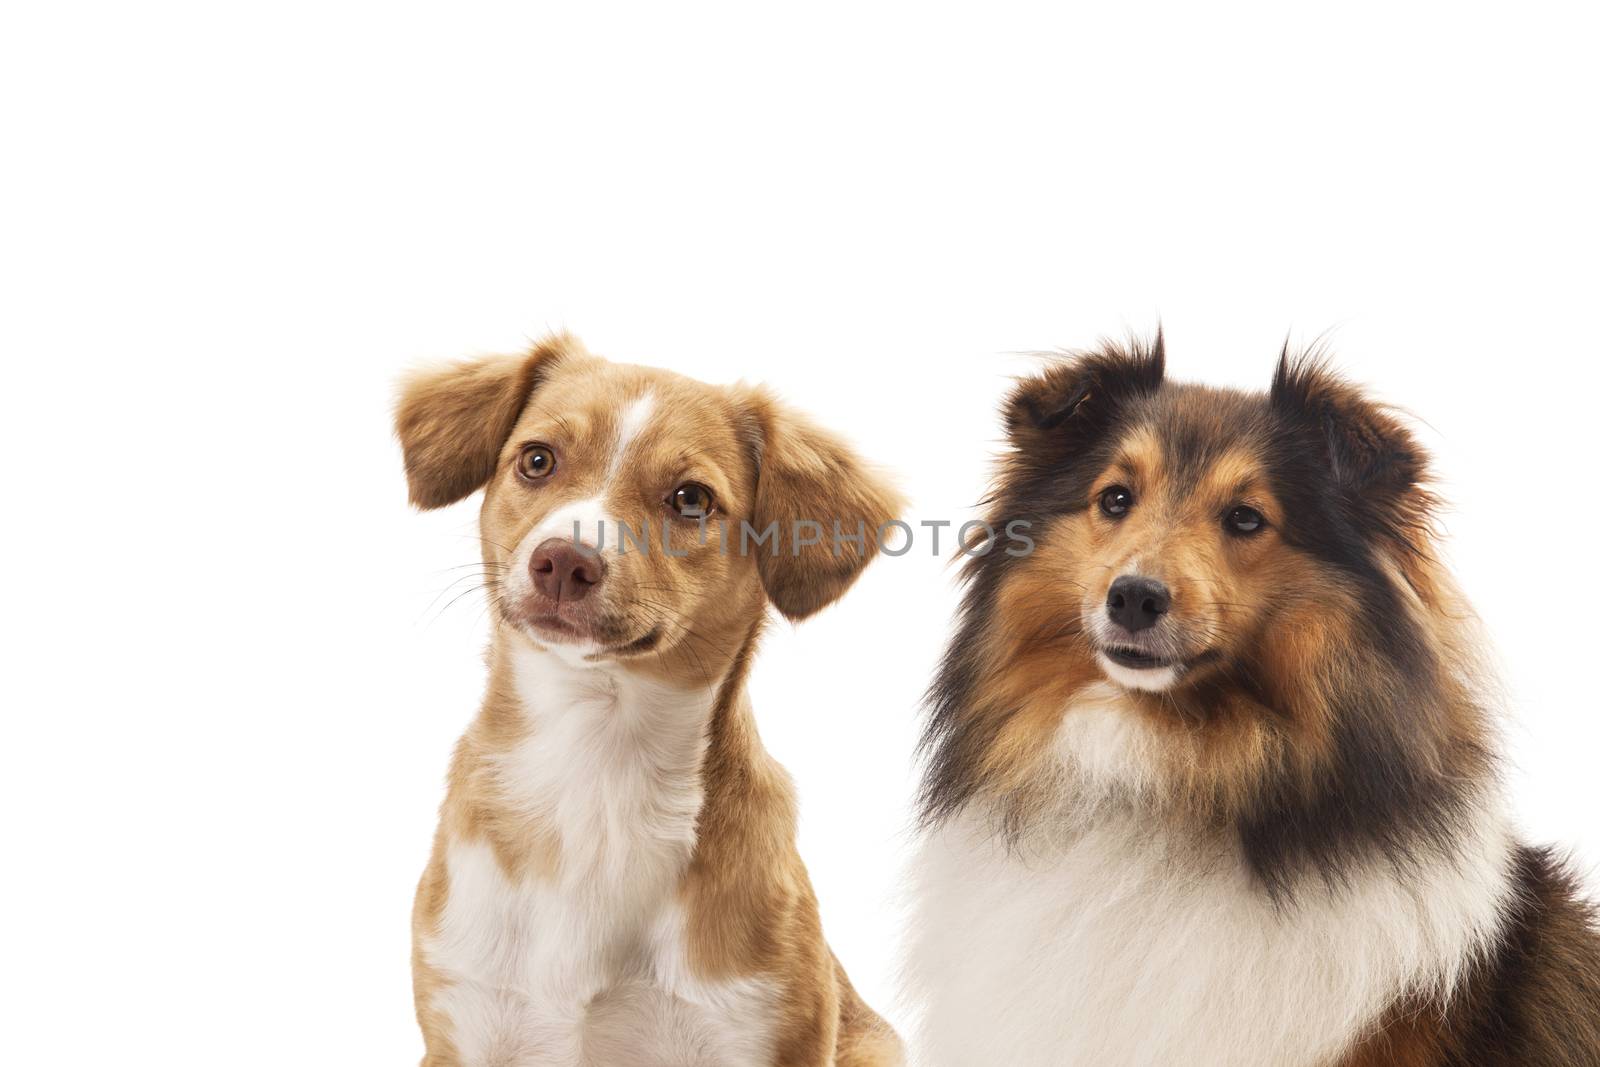 Mixeded breed dog and shetland sheepdog